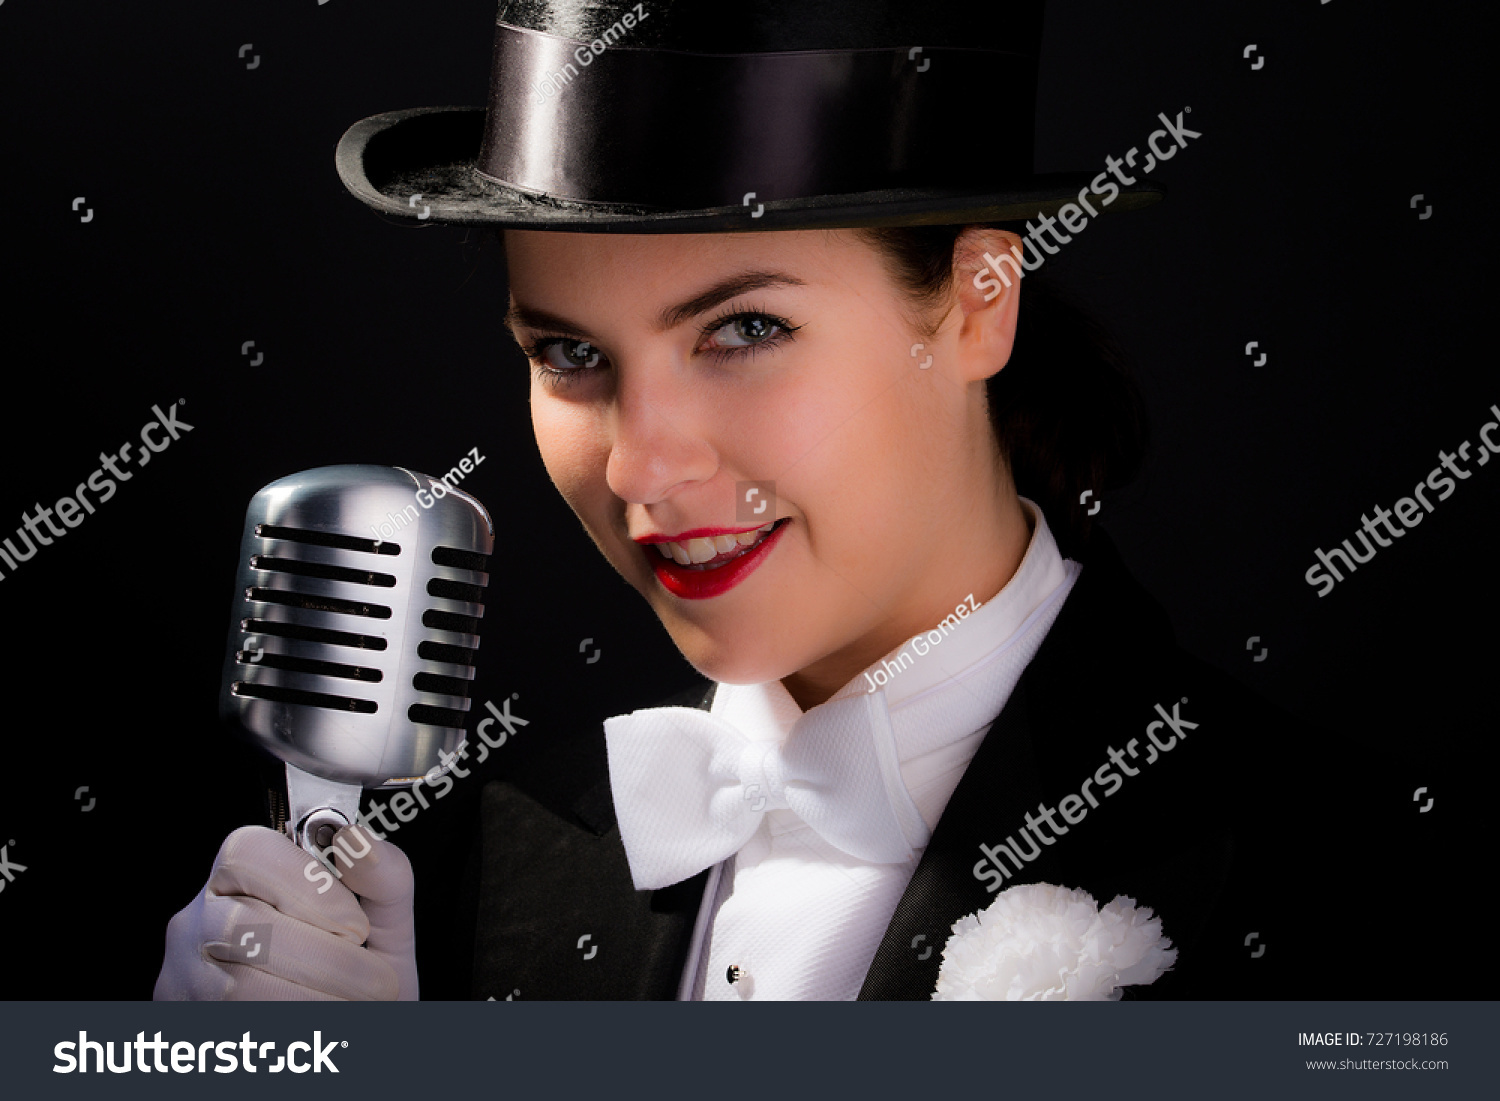 2,241 Cabaret singers Images, Stock Photos & Vectors | Shutterstock